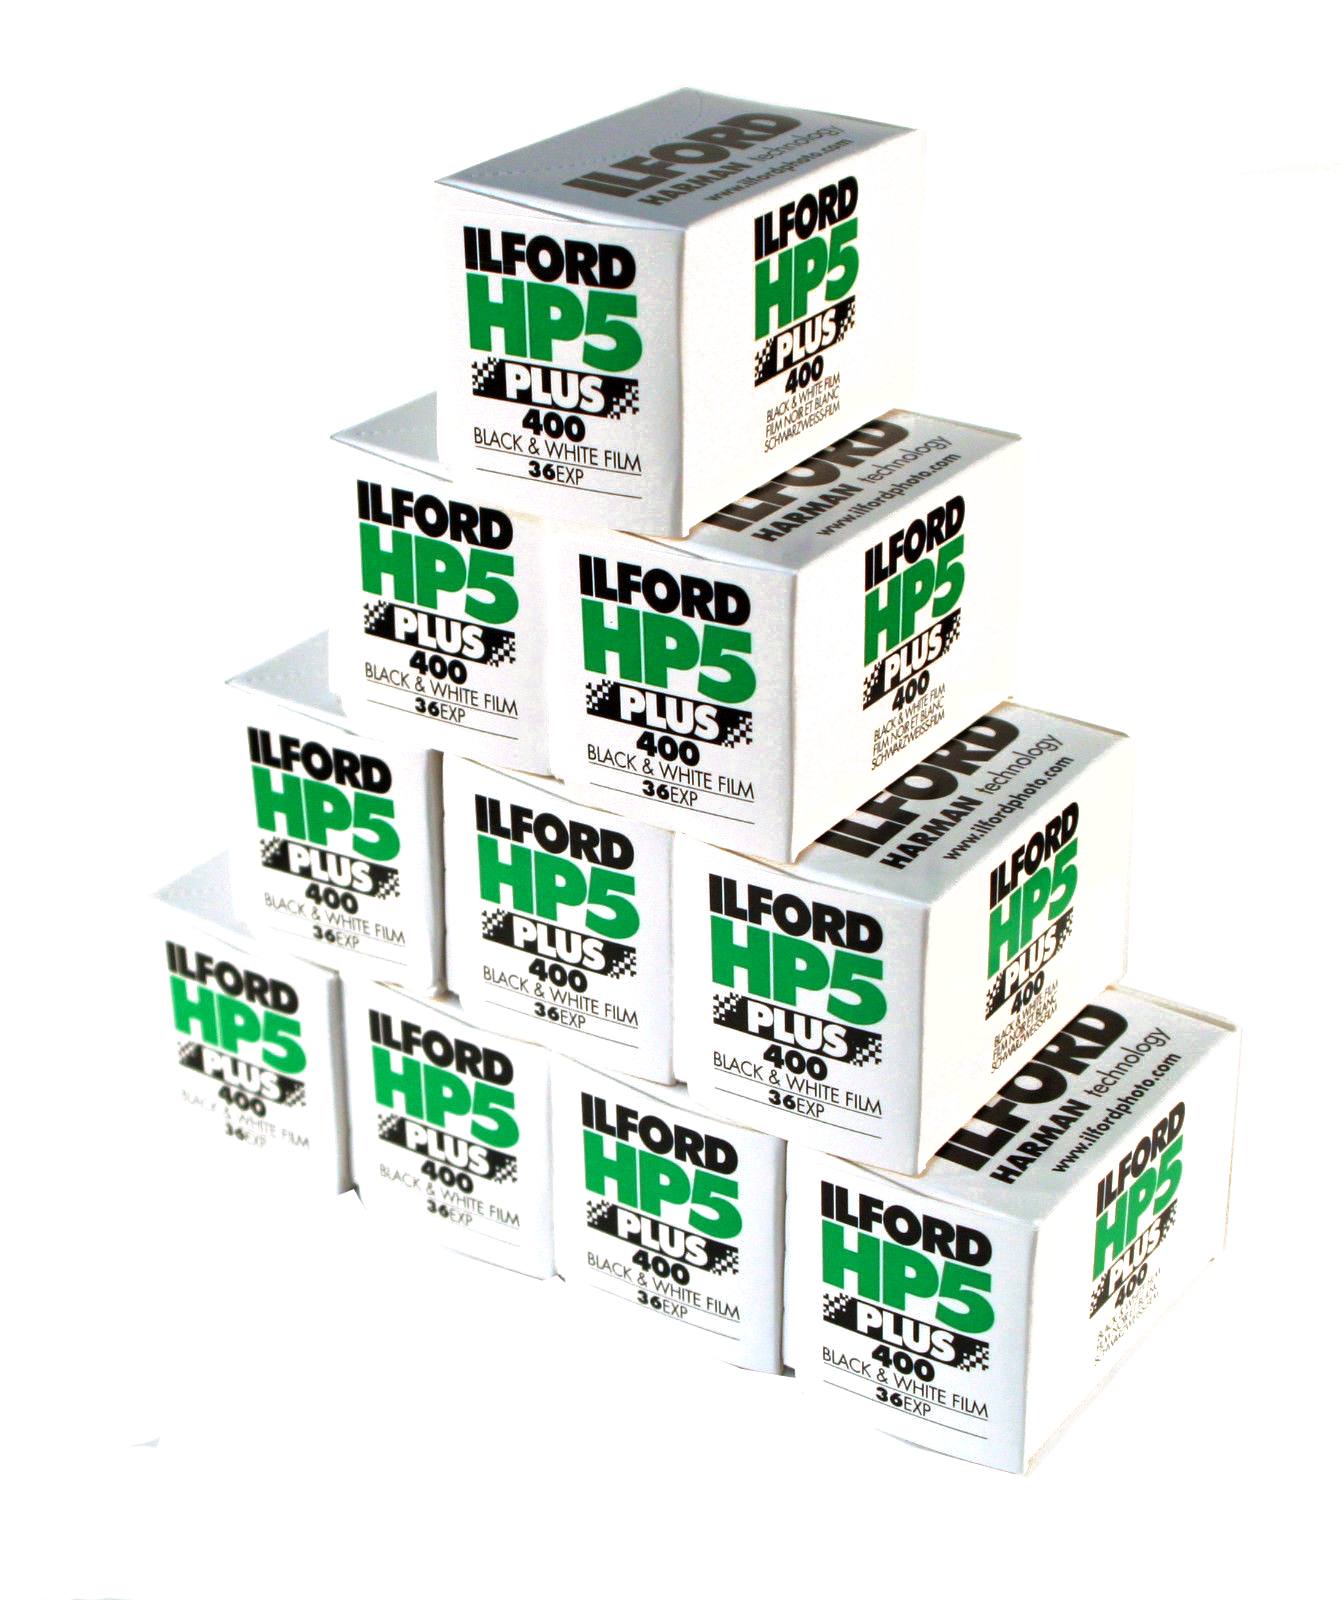 Ilford HP5 Plus 400 Black & White 35mm film - 36 exp.